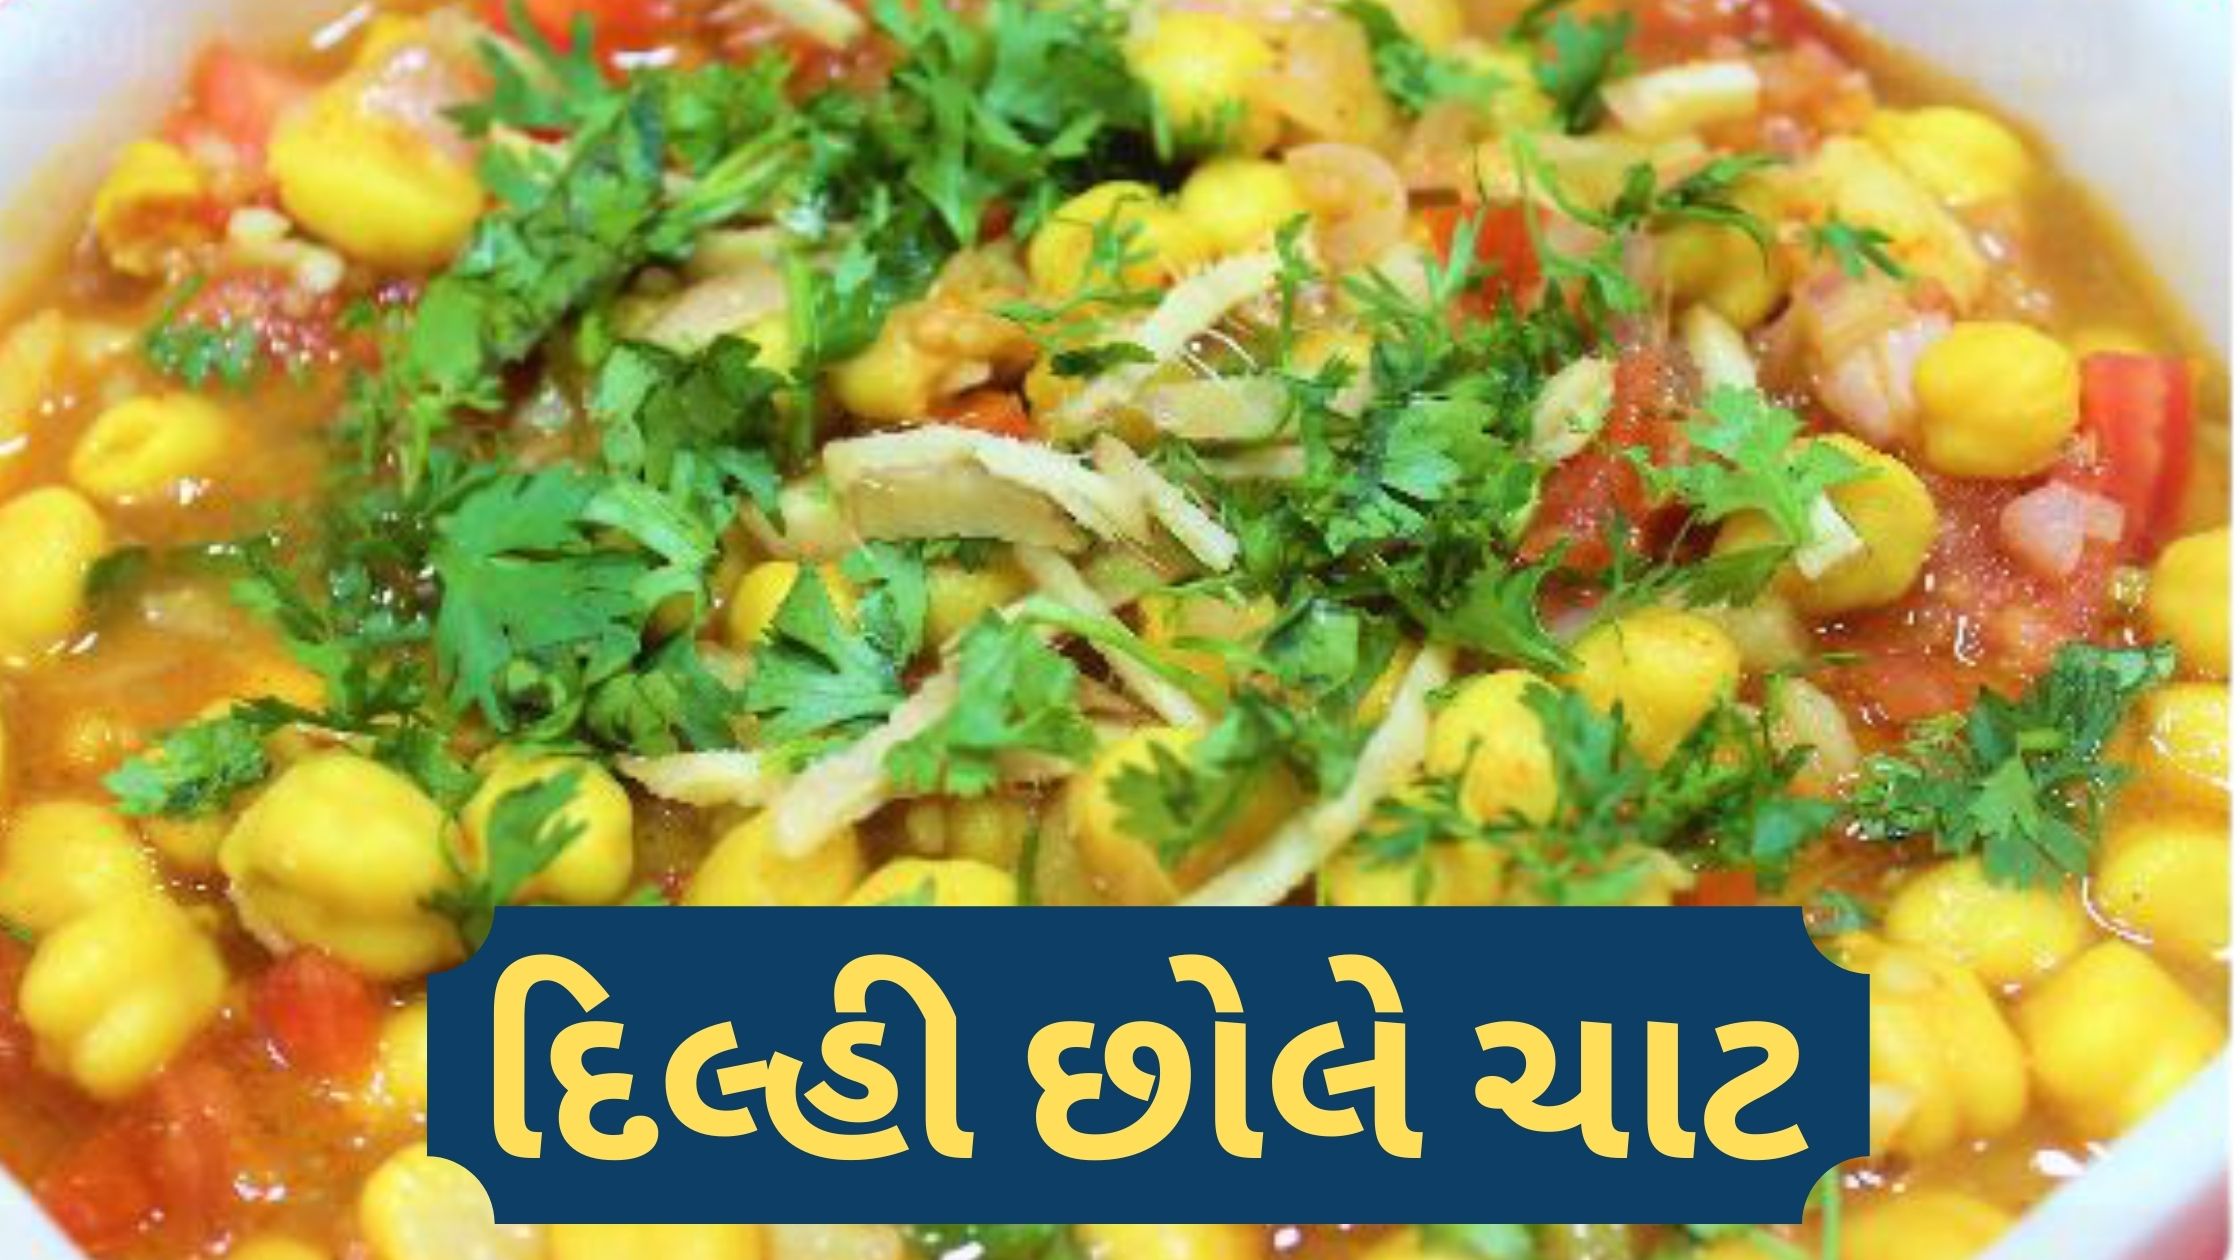 Delhi chaat recipe in gujarati language